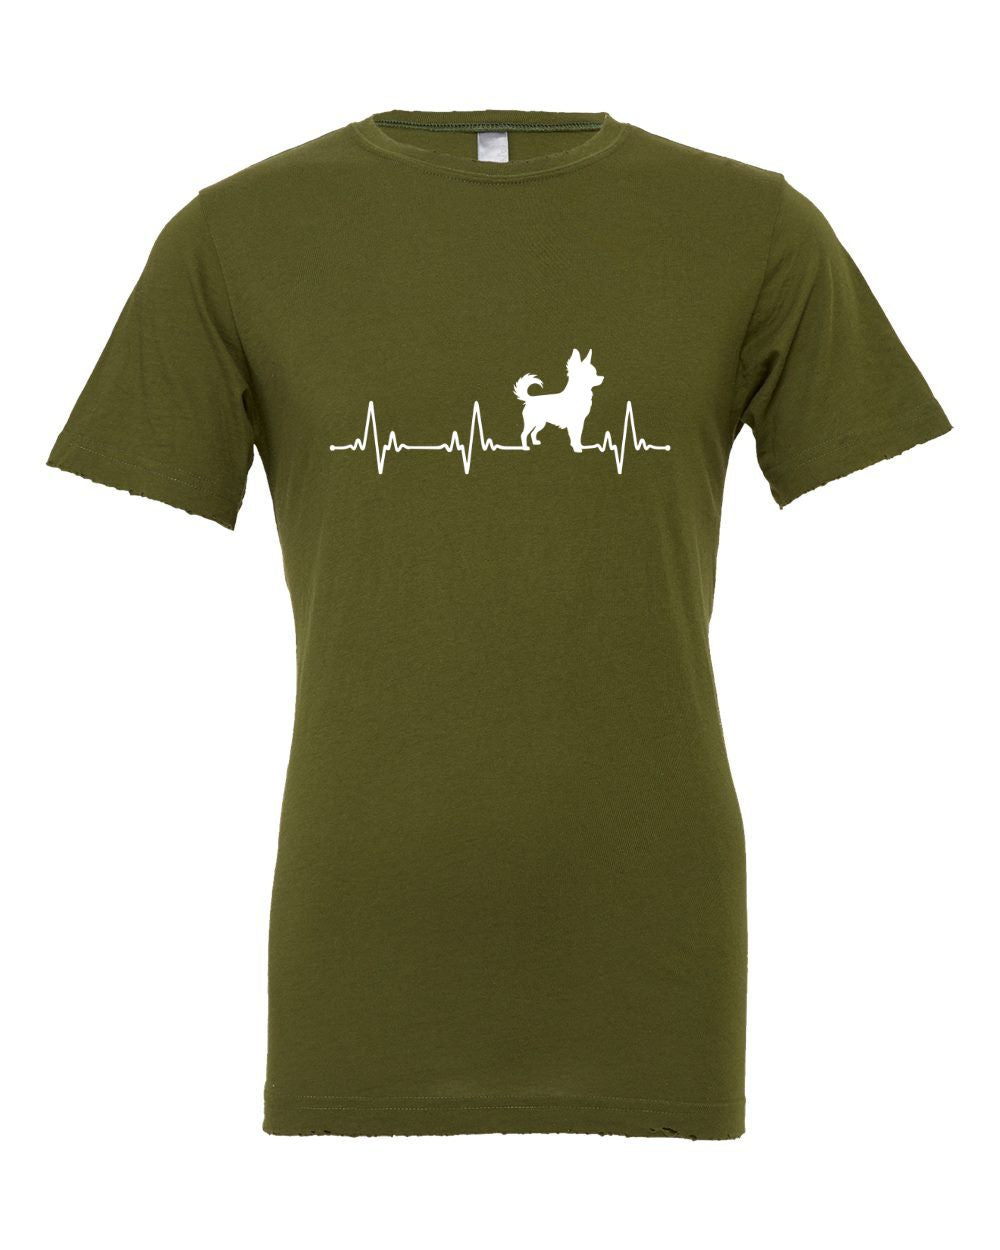 Chihuahua Heartbeat T-Shirt